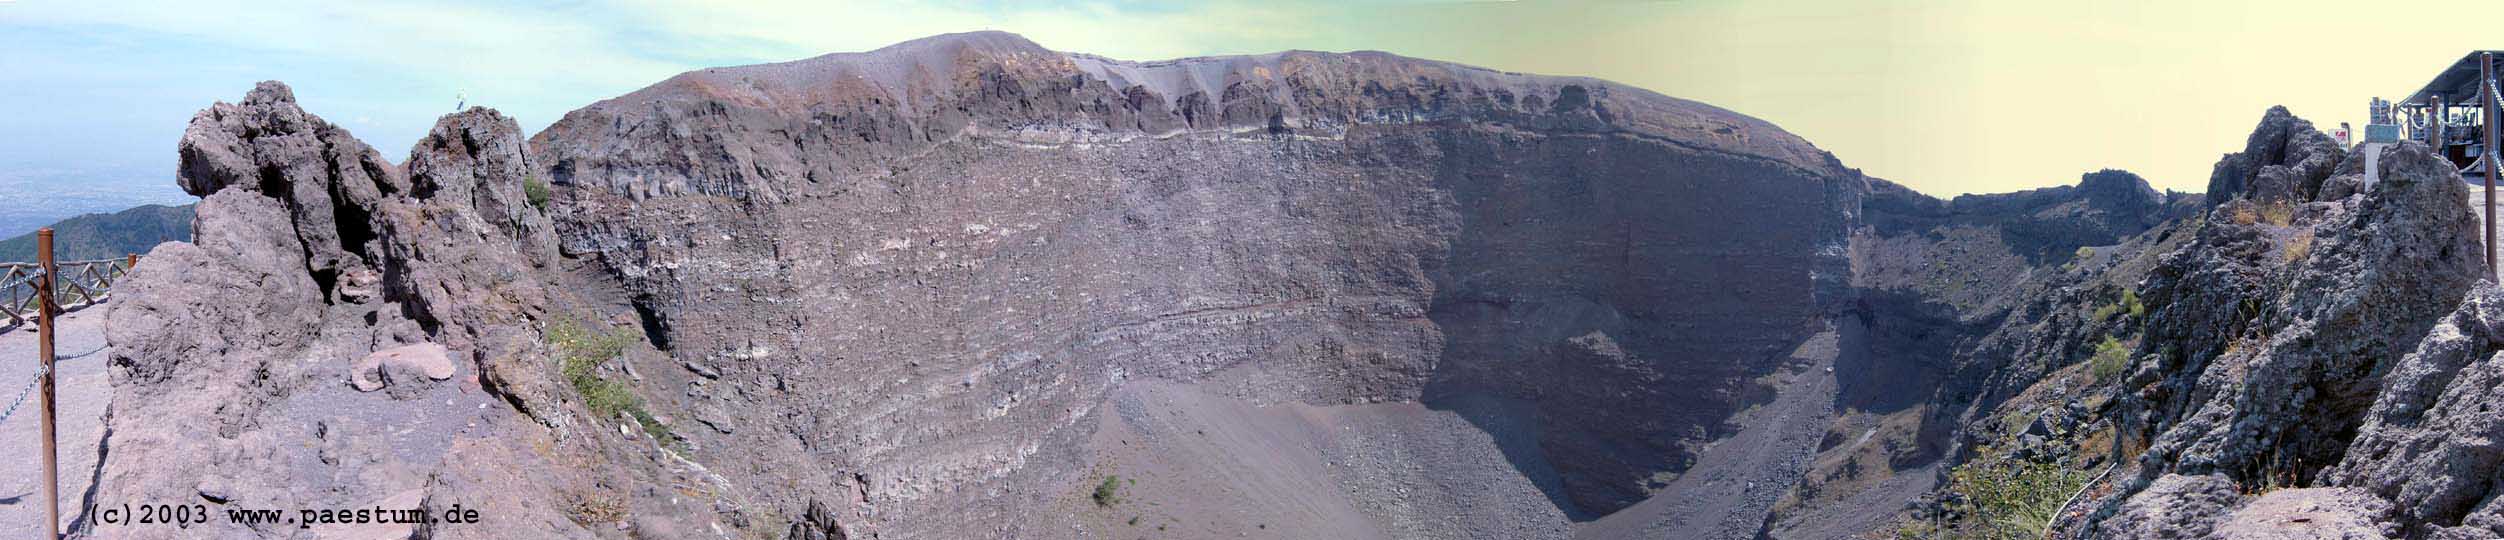 Panorama Krater des Vesuv